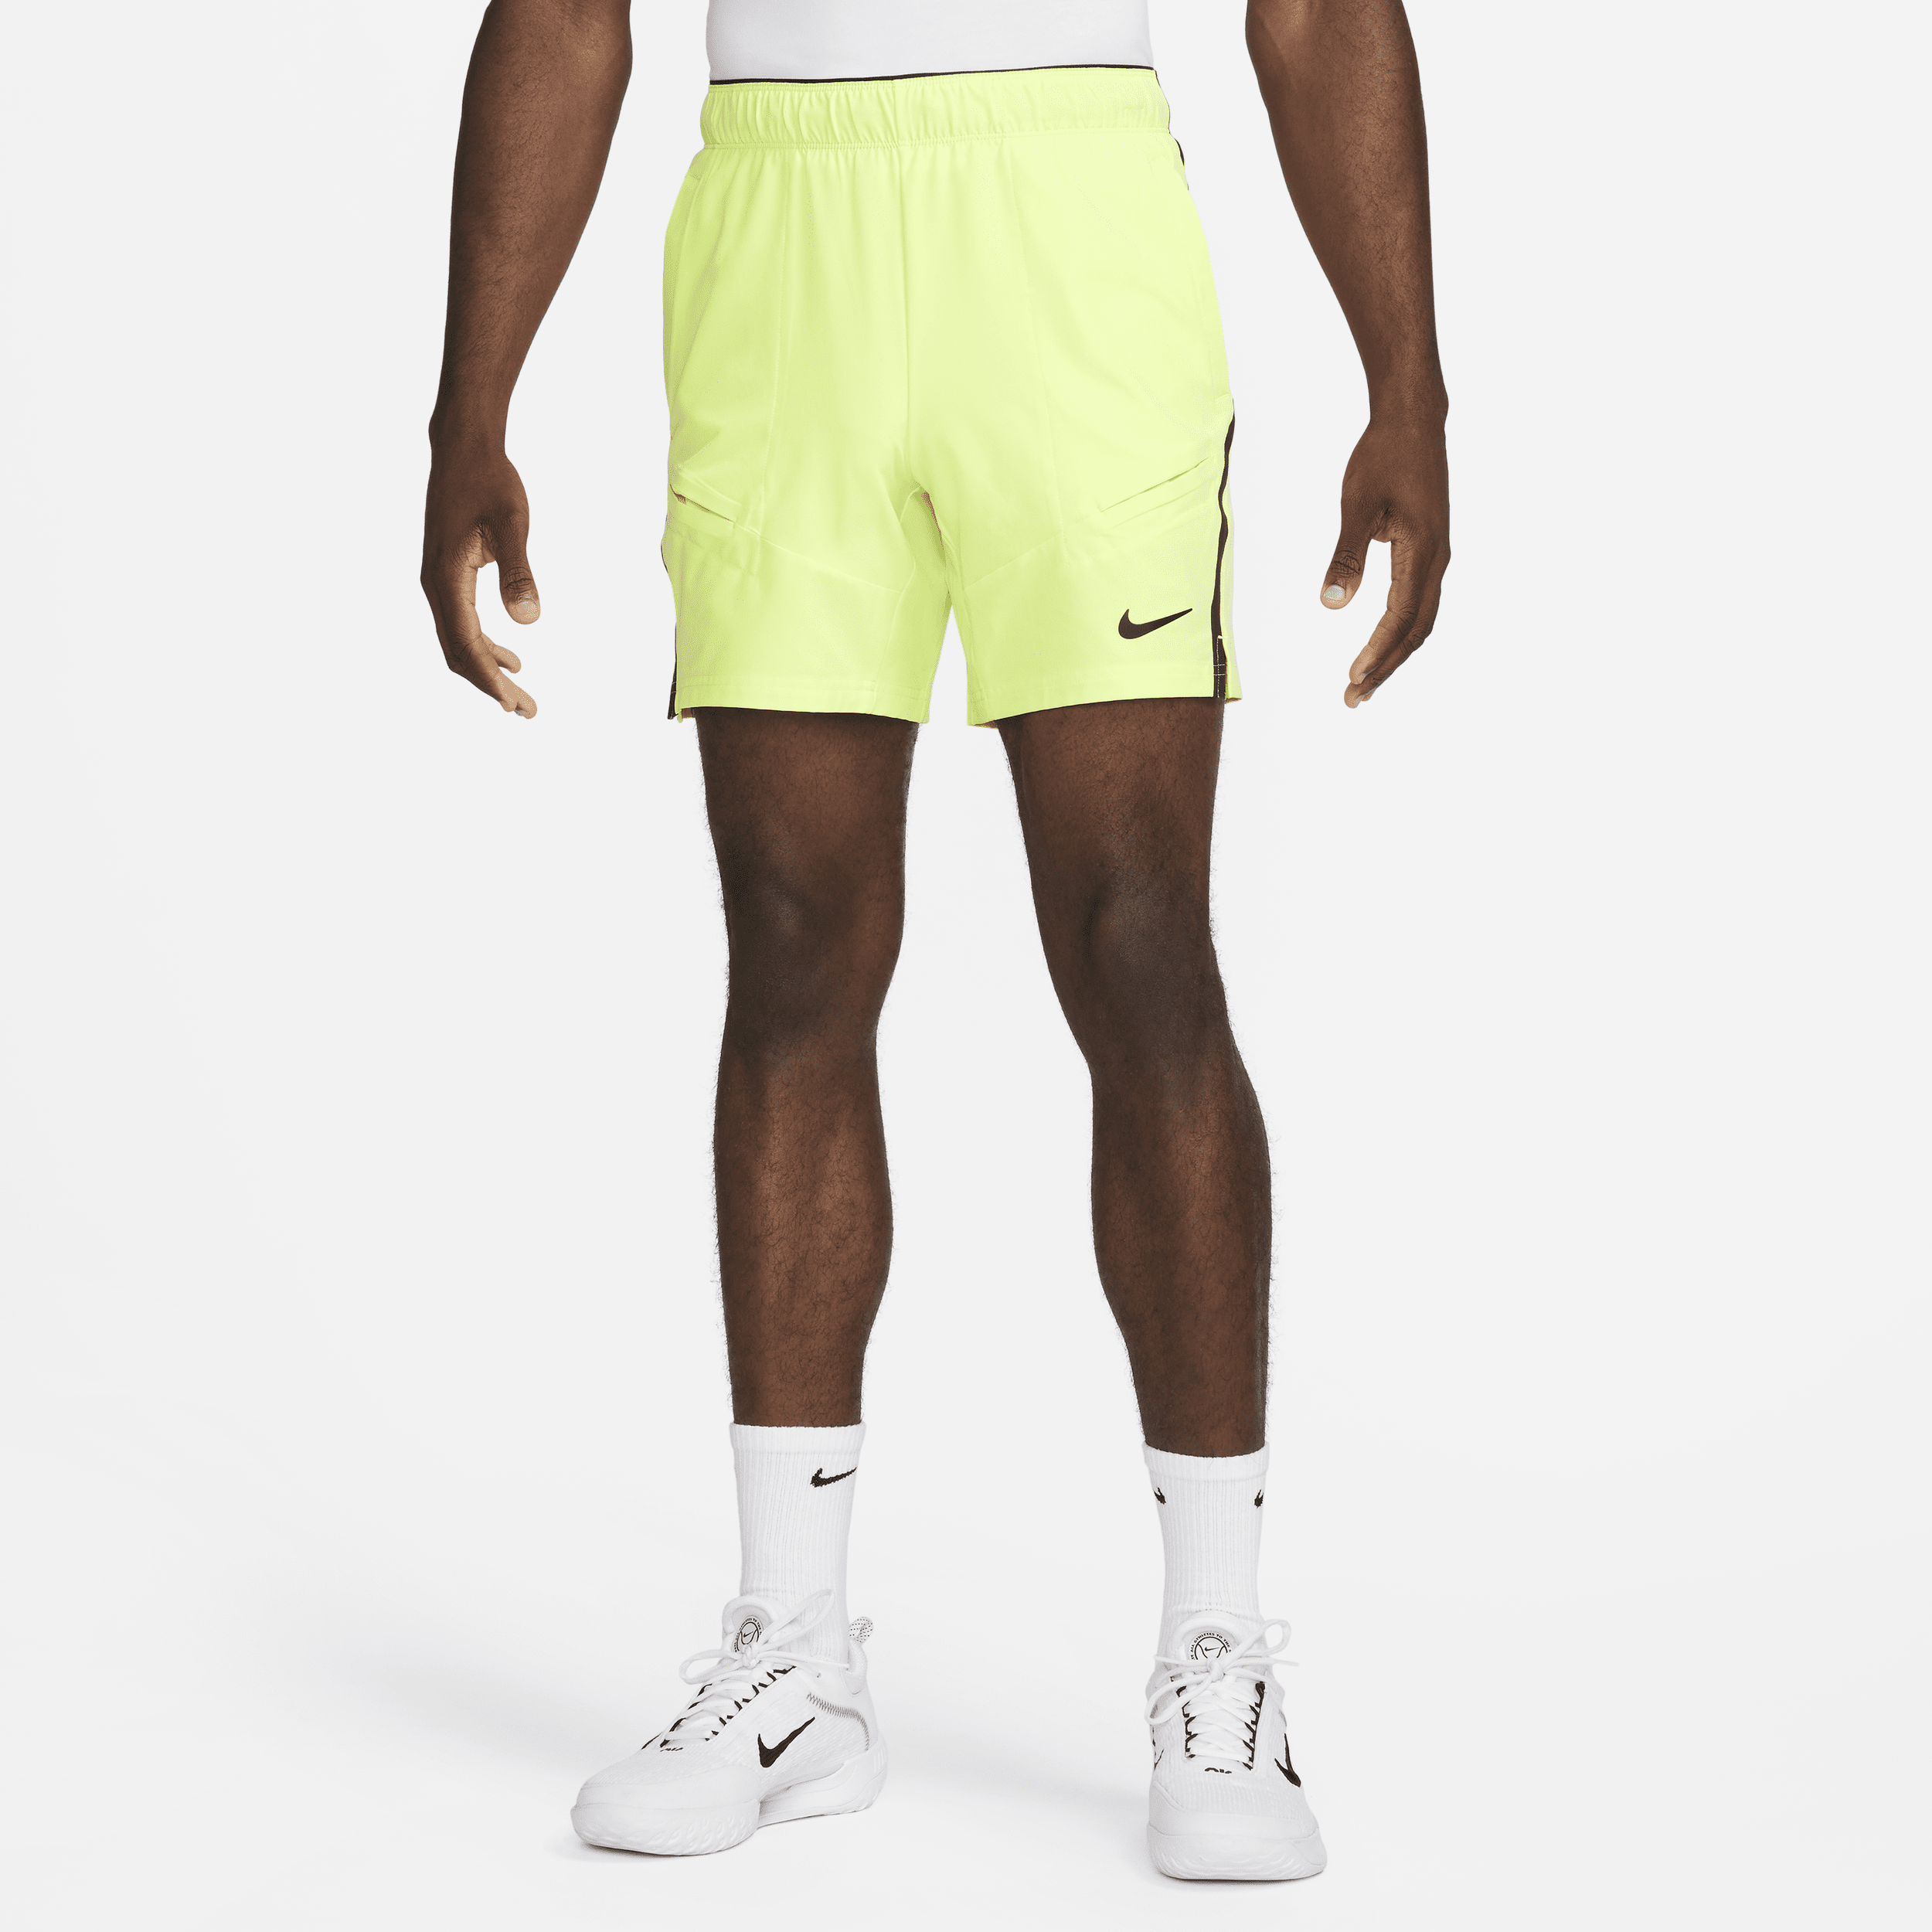 NikeCourt Advantage Dri-FIT-tennisshorts (18 cm) til mænd - gul